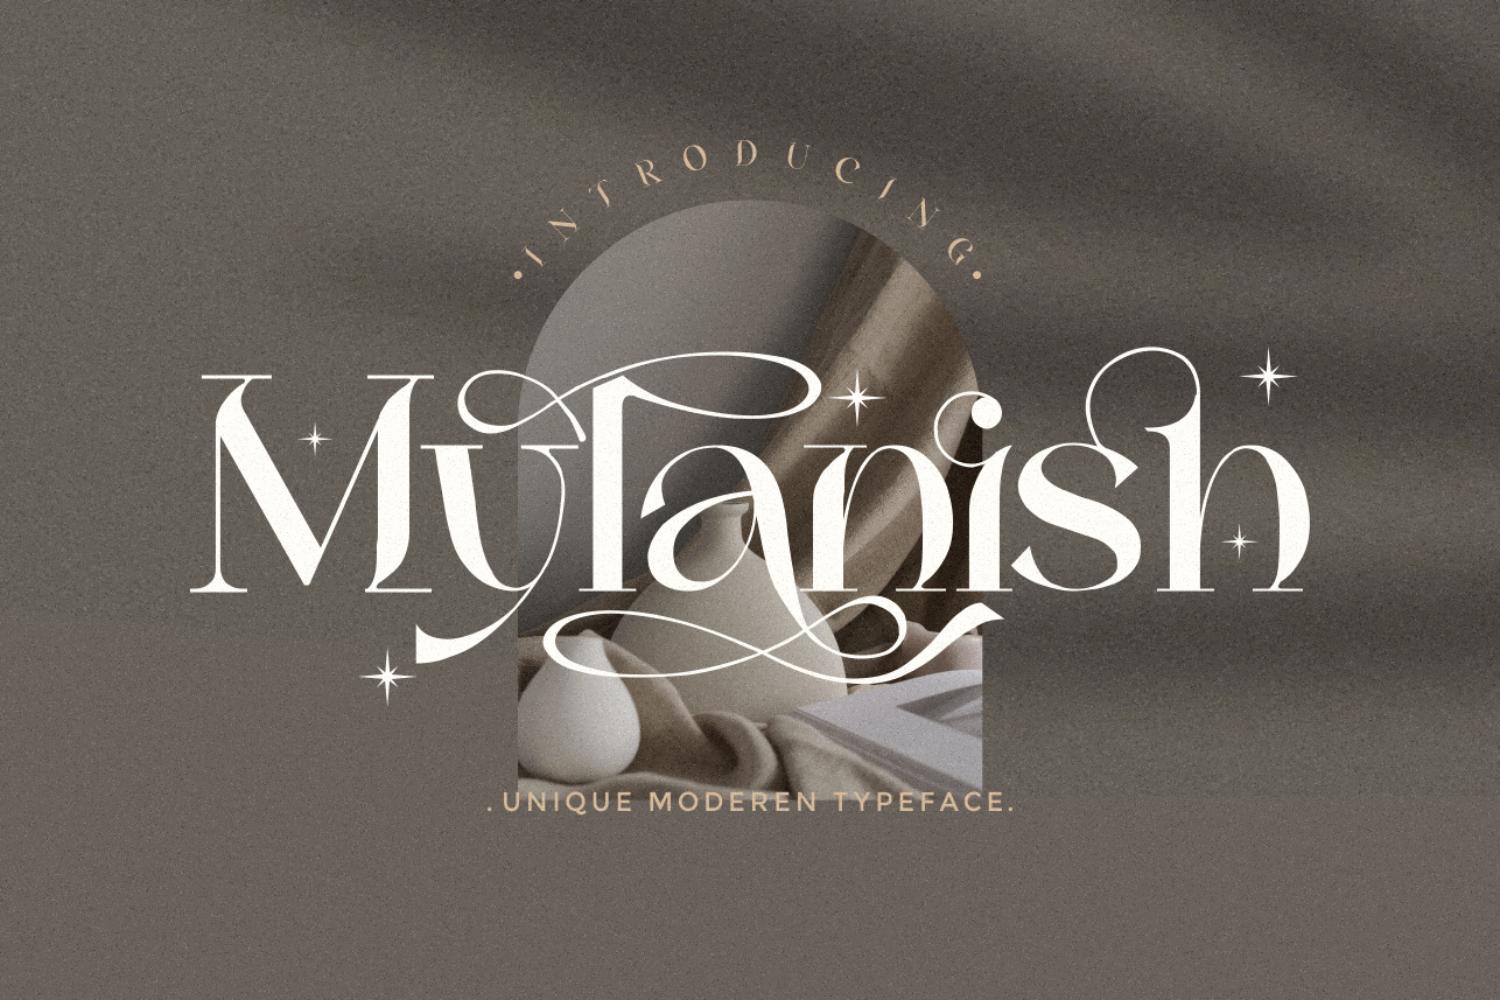 Mylanish Font